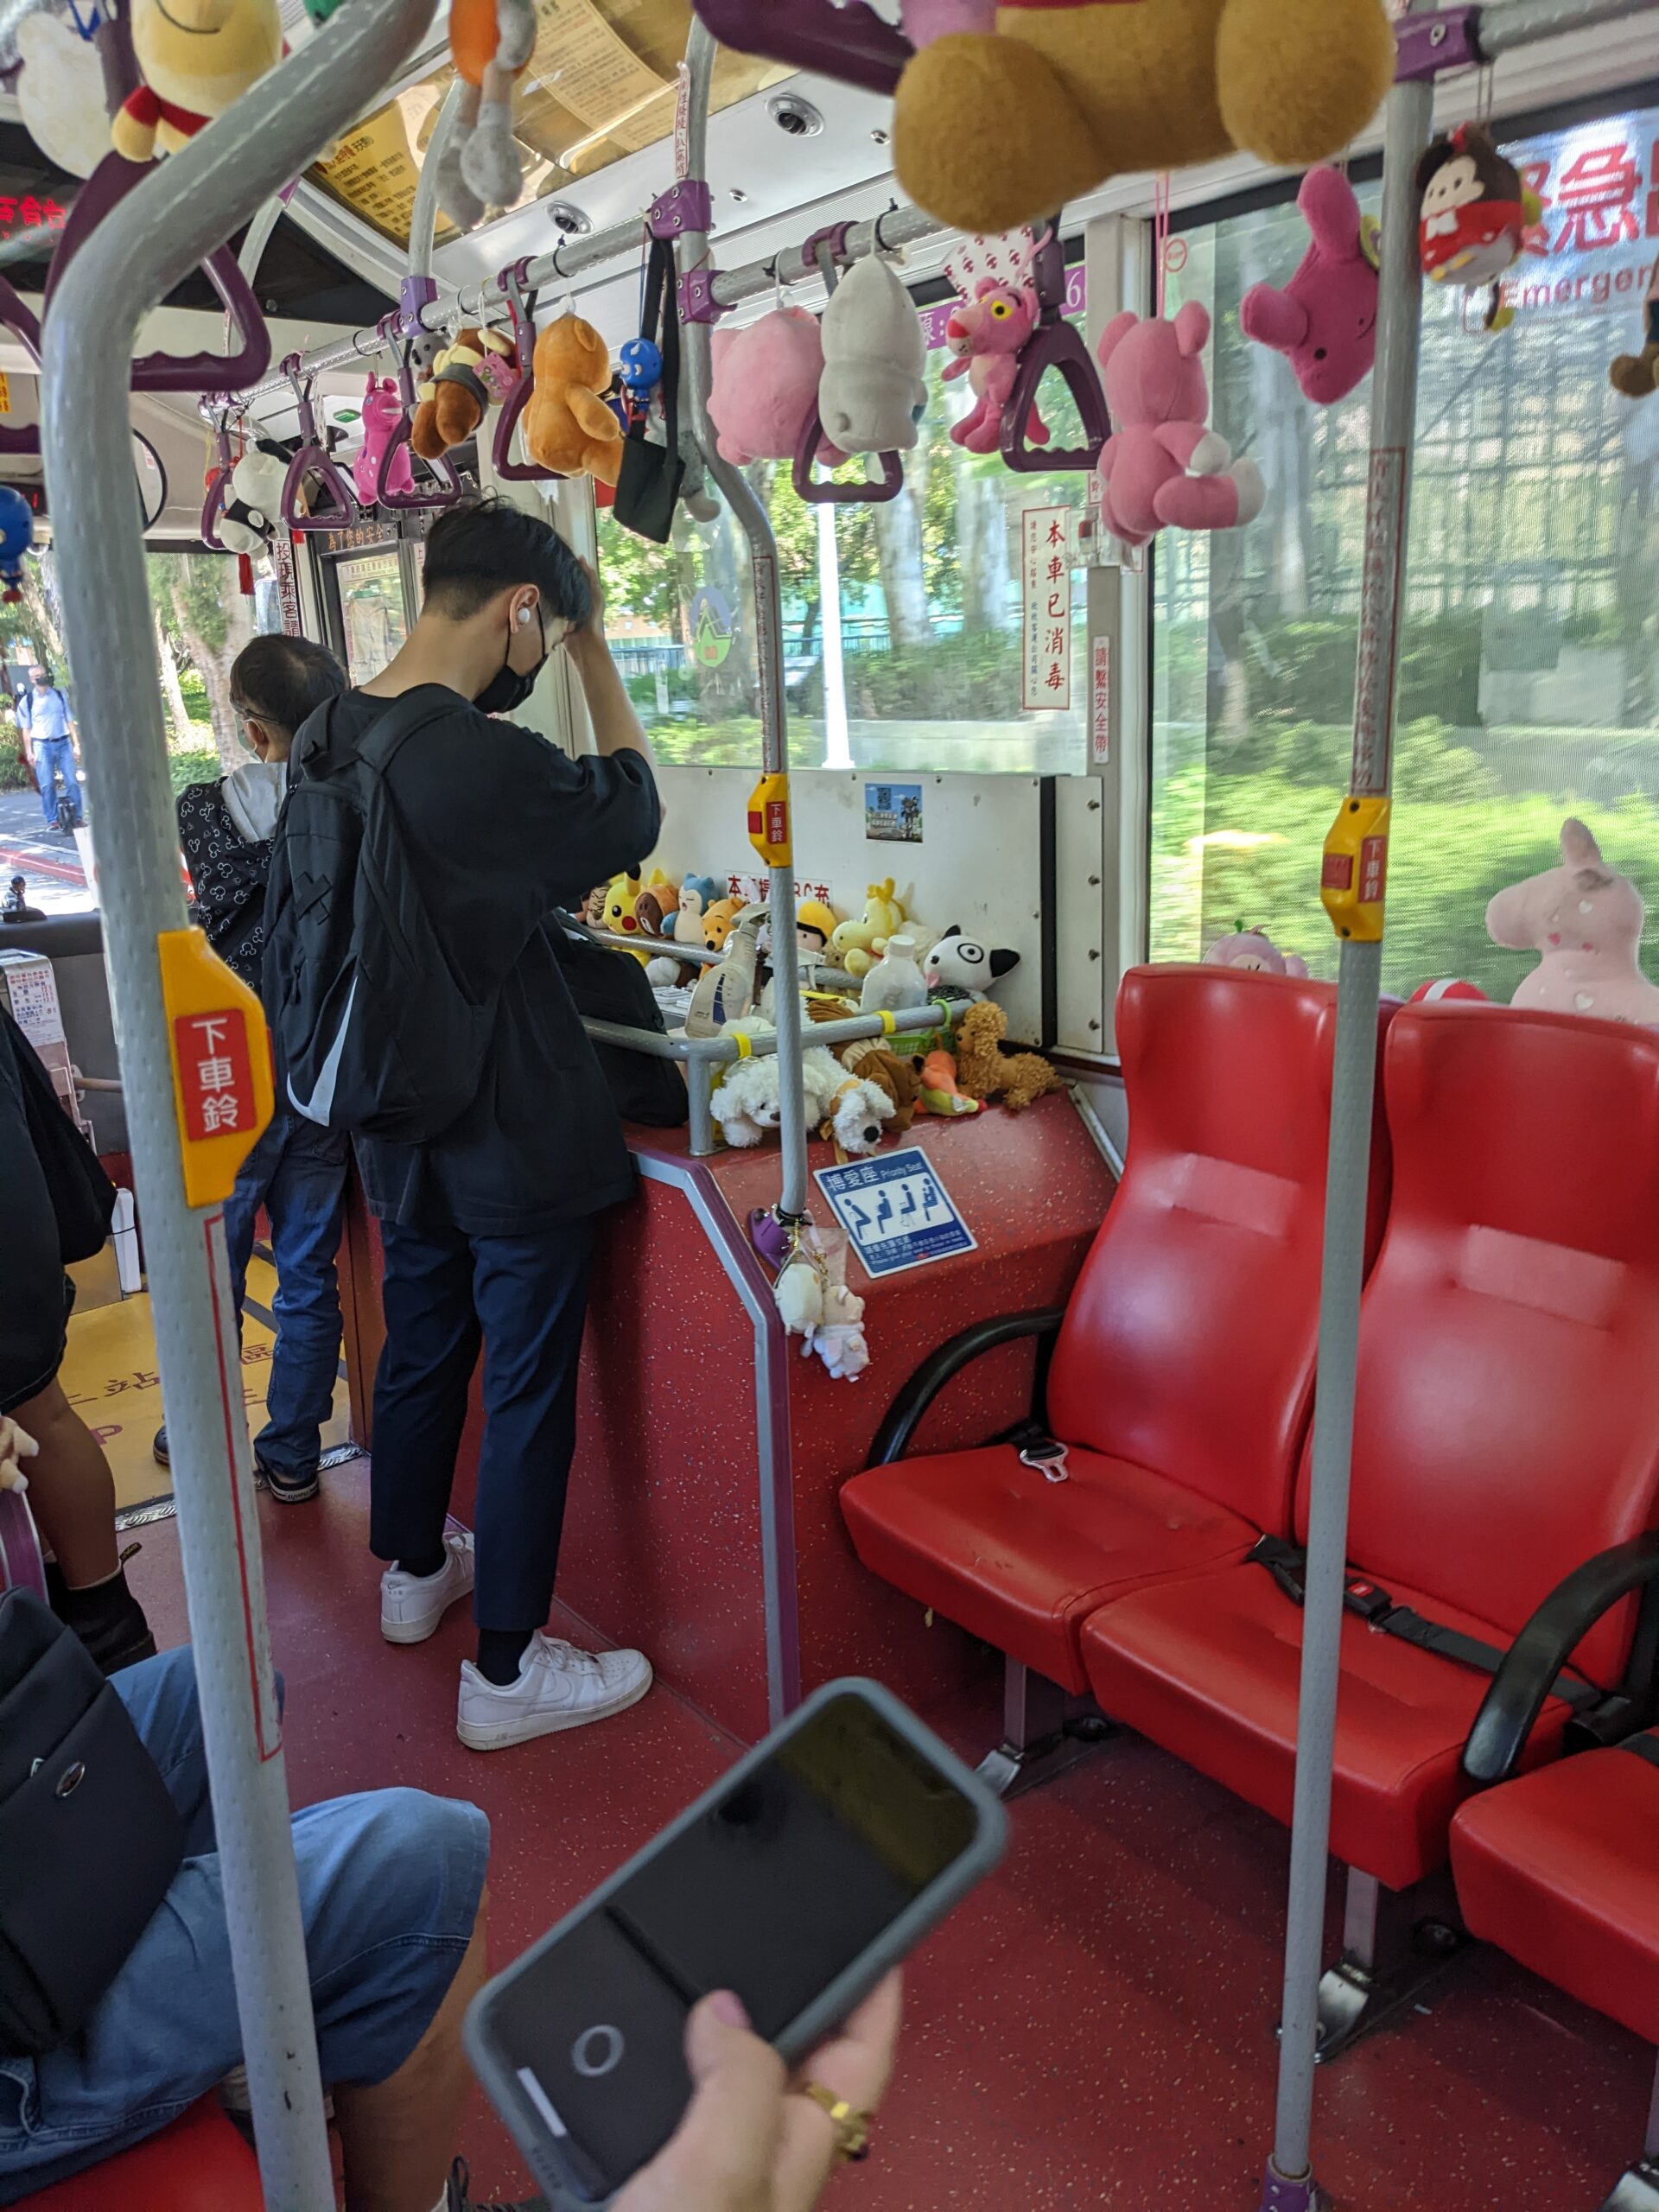 Bus Surprise In Taiwan!